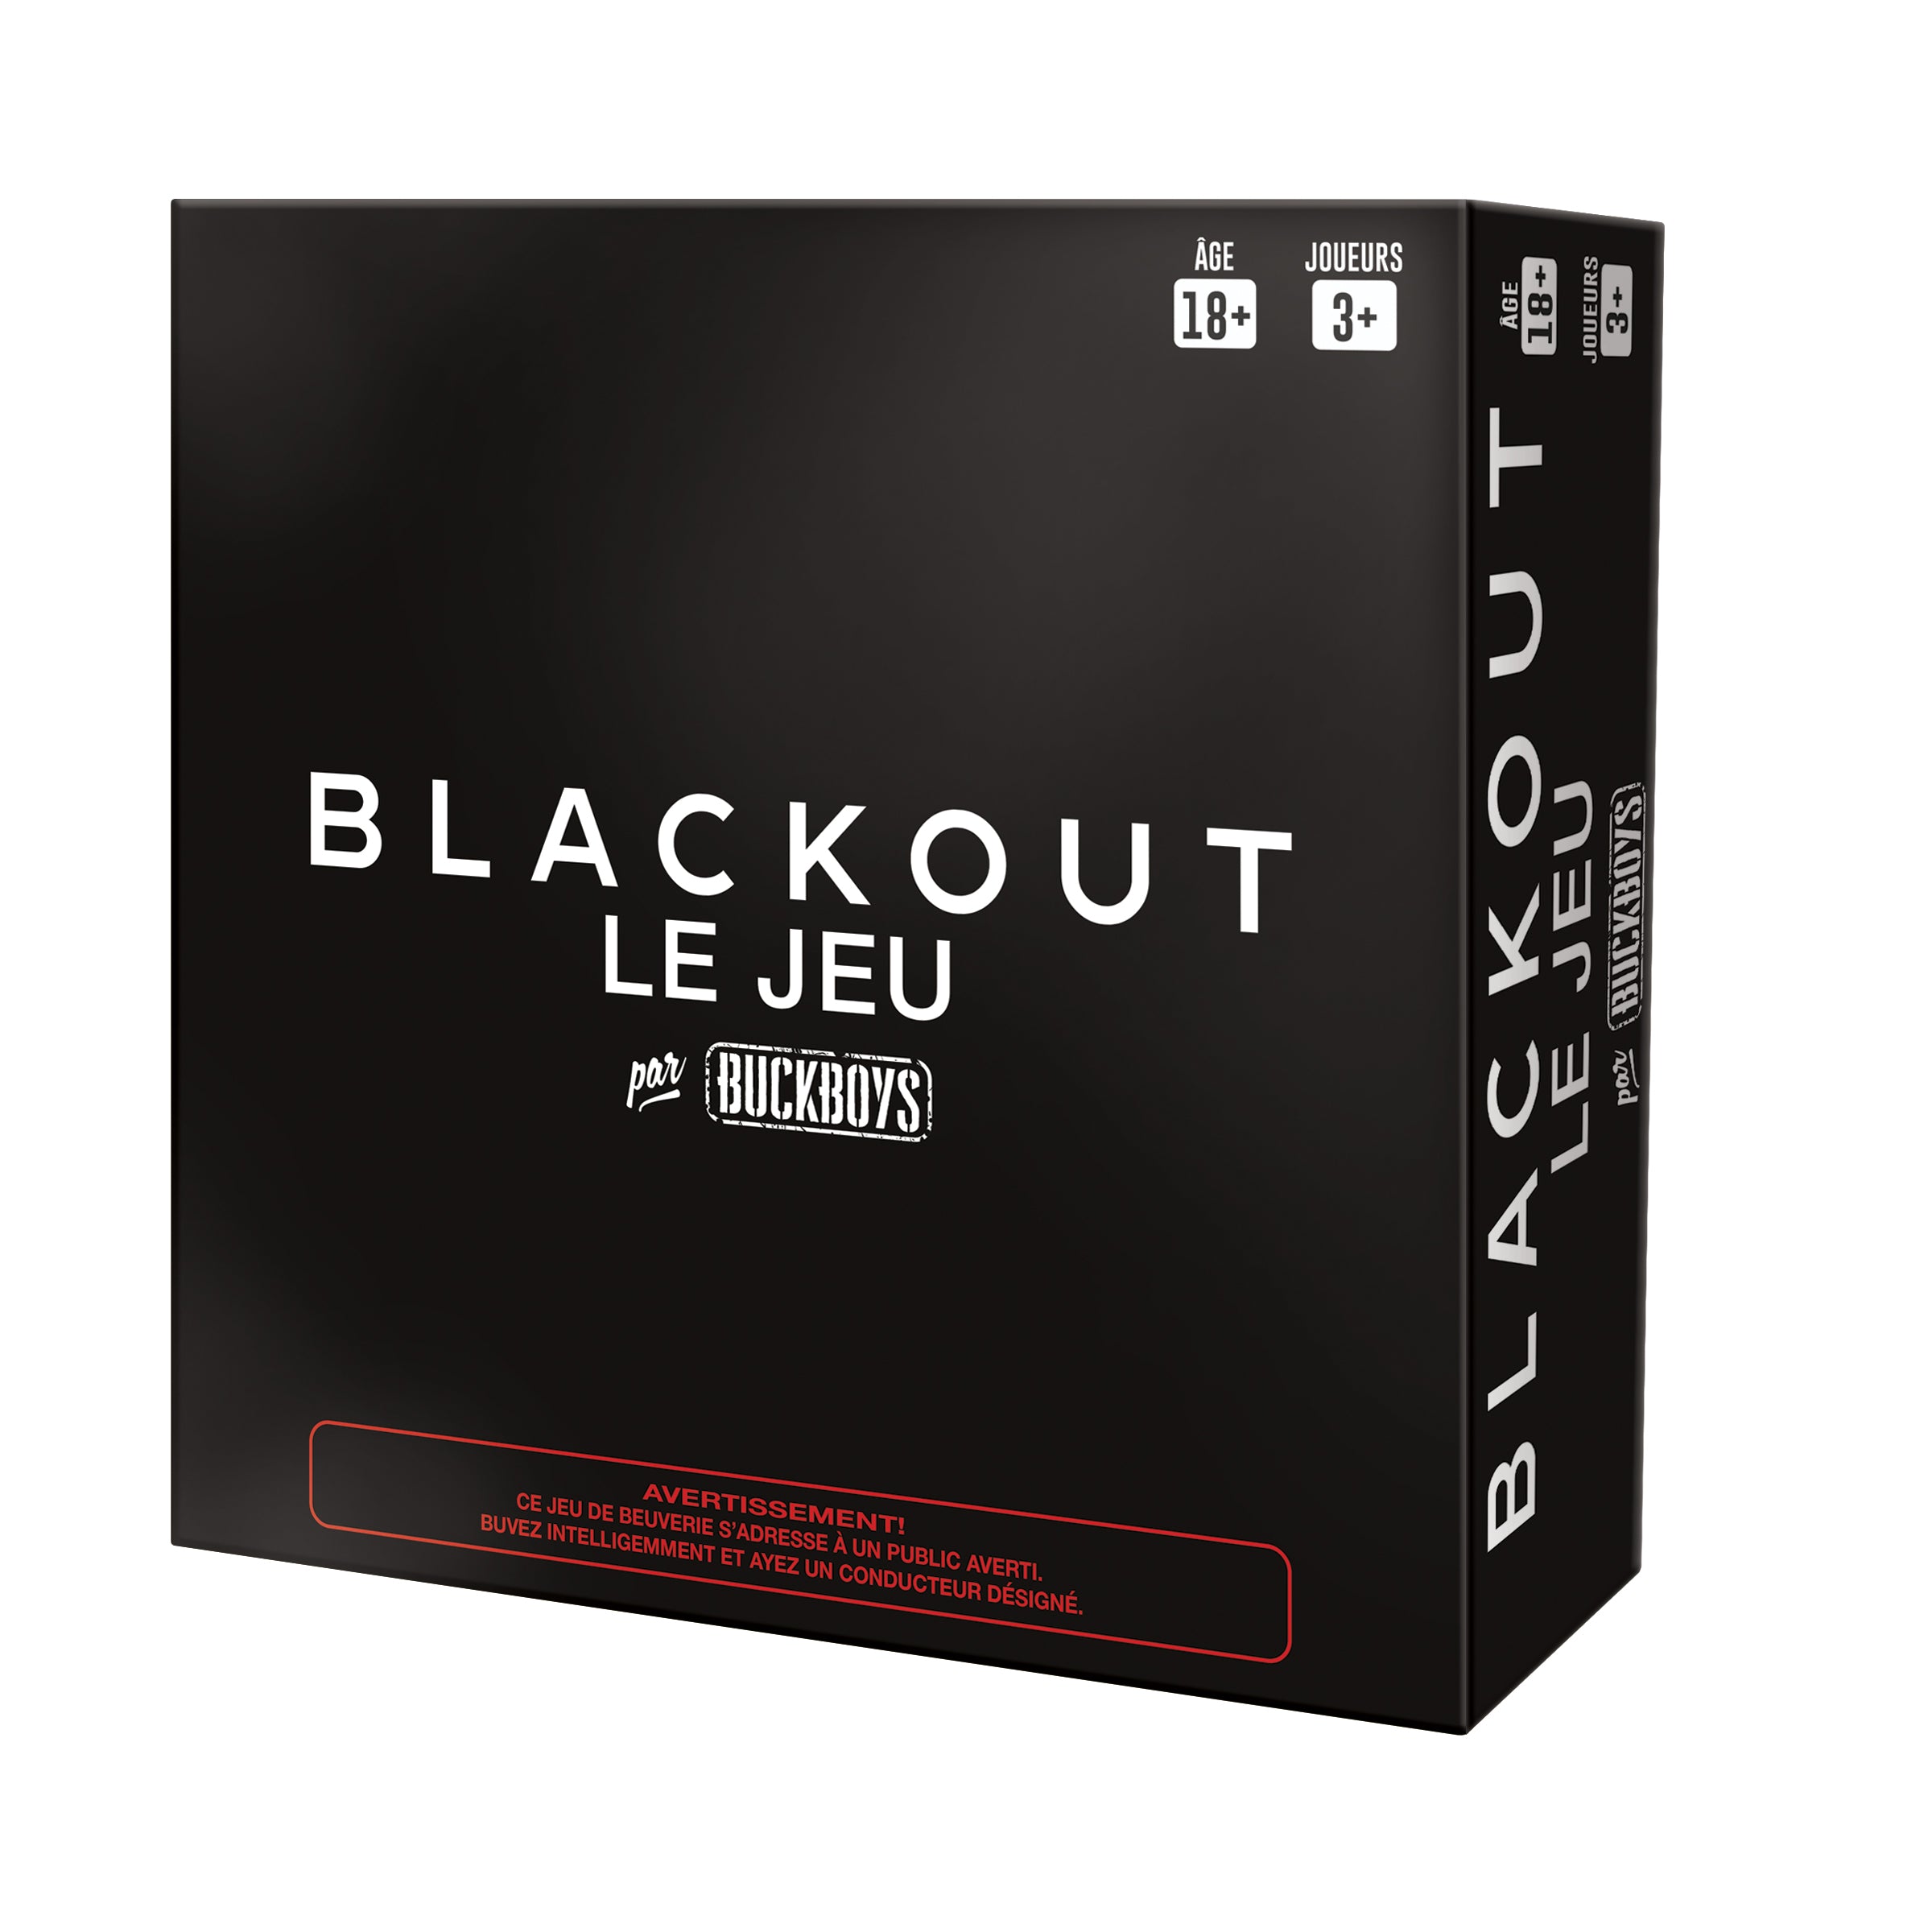 Blackout - Par Buckboys (Fr)